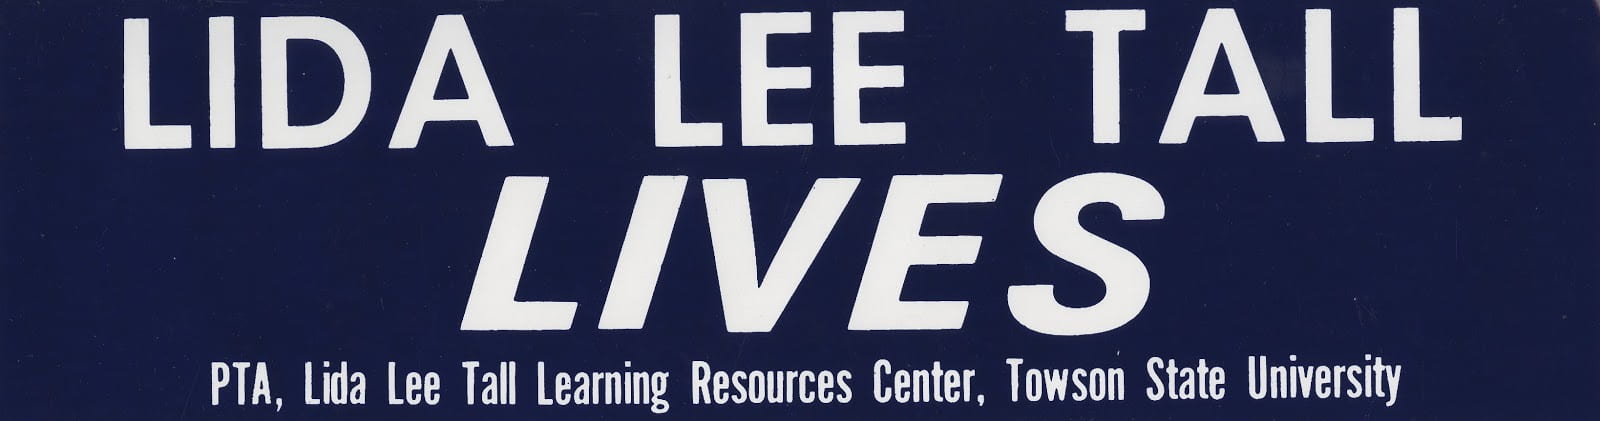 Bumper sticker from the PTA (Parent Teacher Association) showing support for the Lida Lee Tall School, circa 1980-1982 